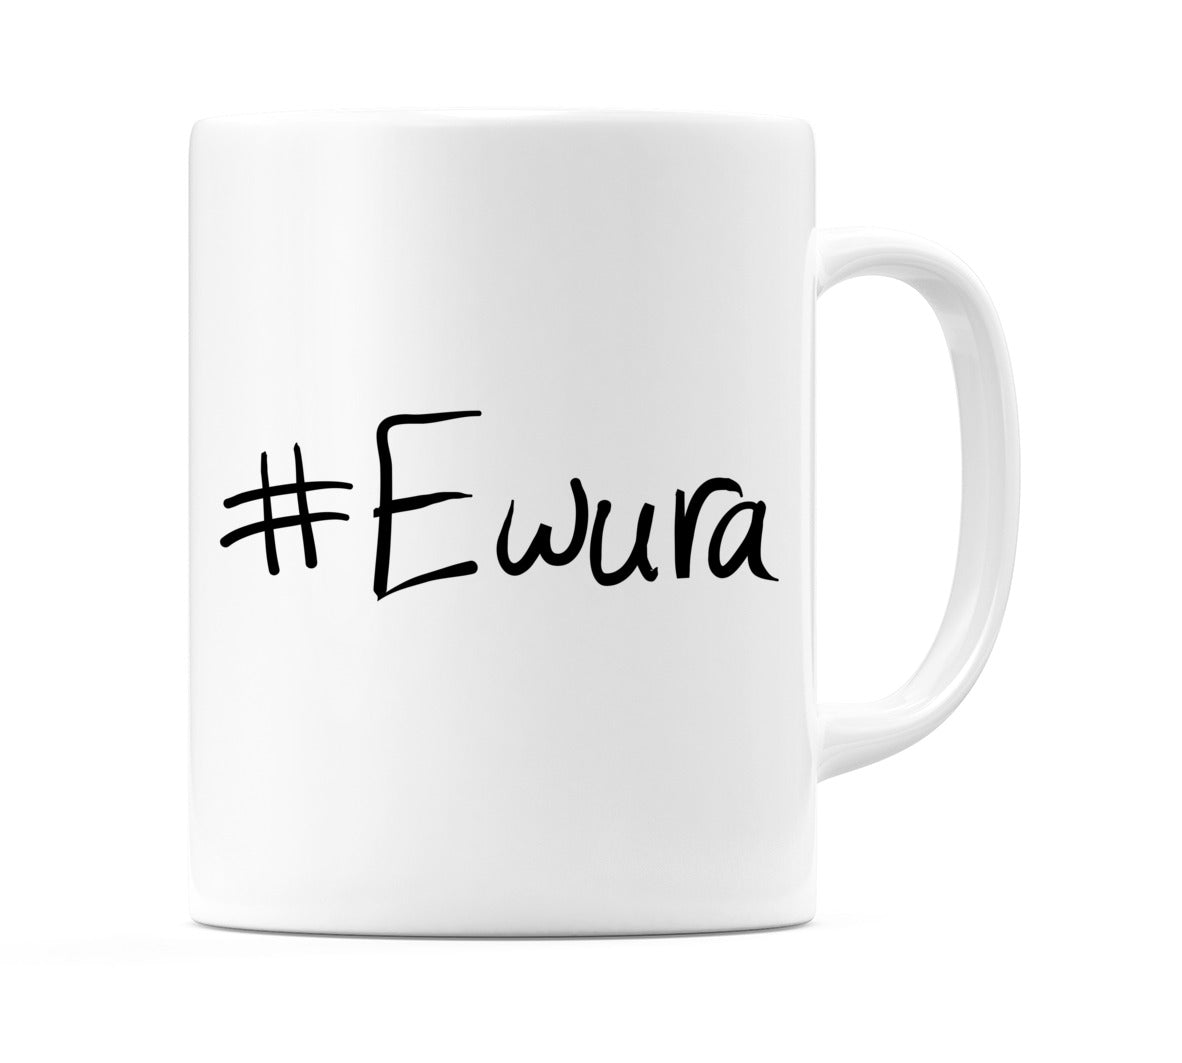 #Ewura Mug